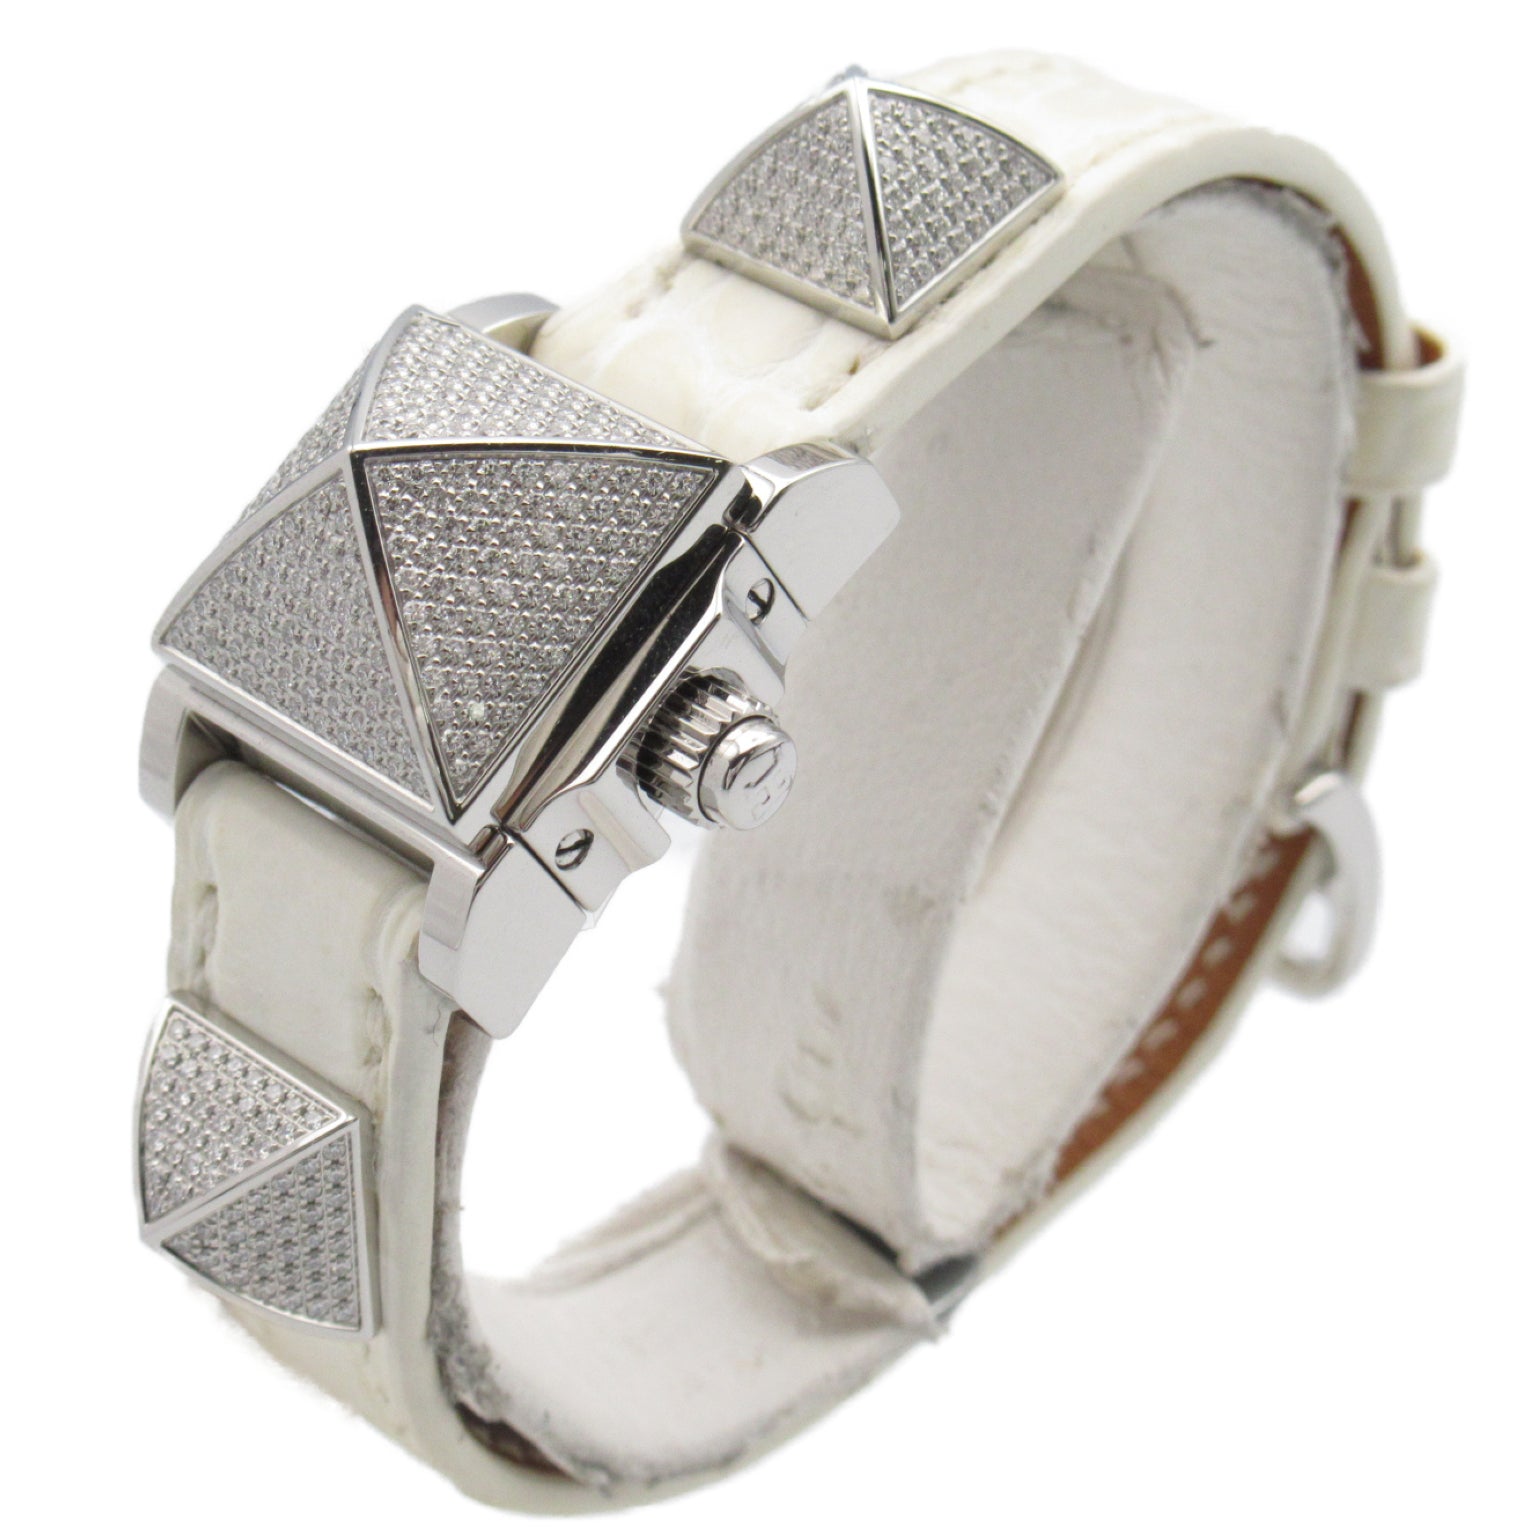 Hermes Hermes Medal  Watch Stainless Steel Alligator Leather  White Me2.130